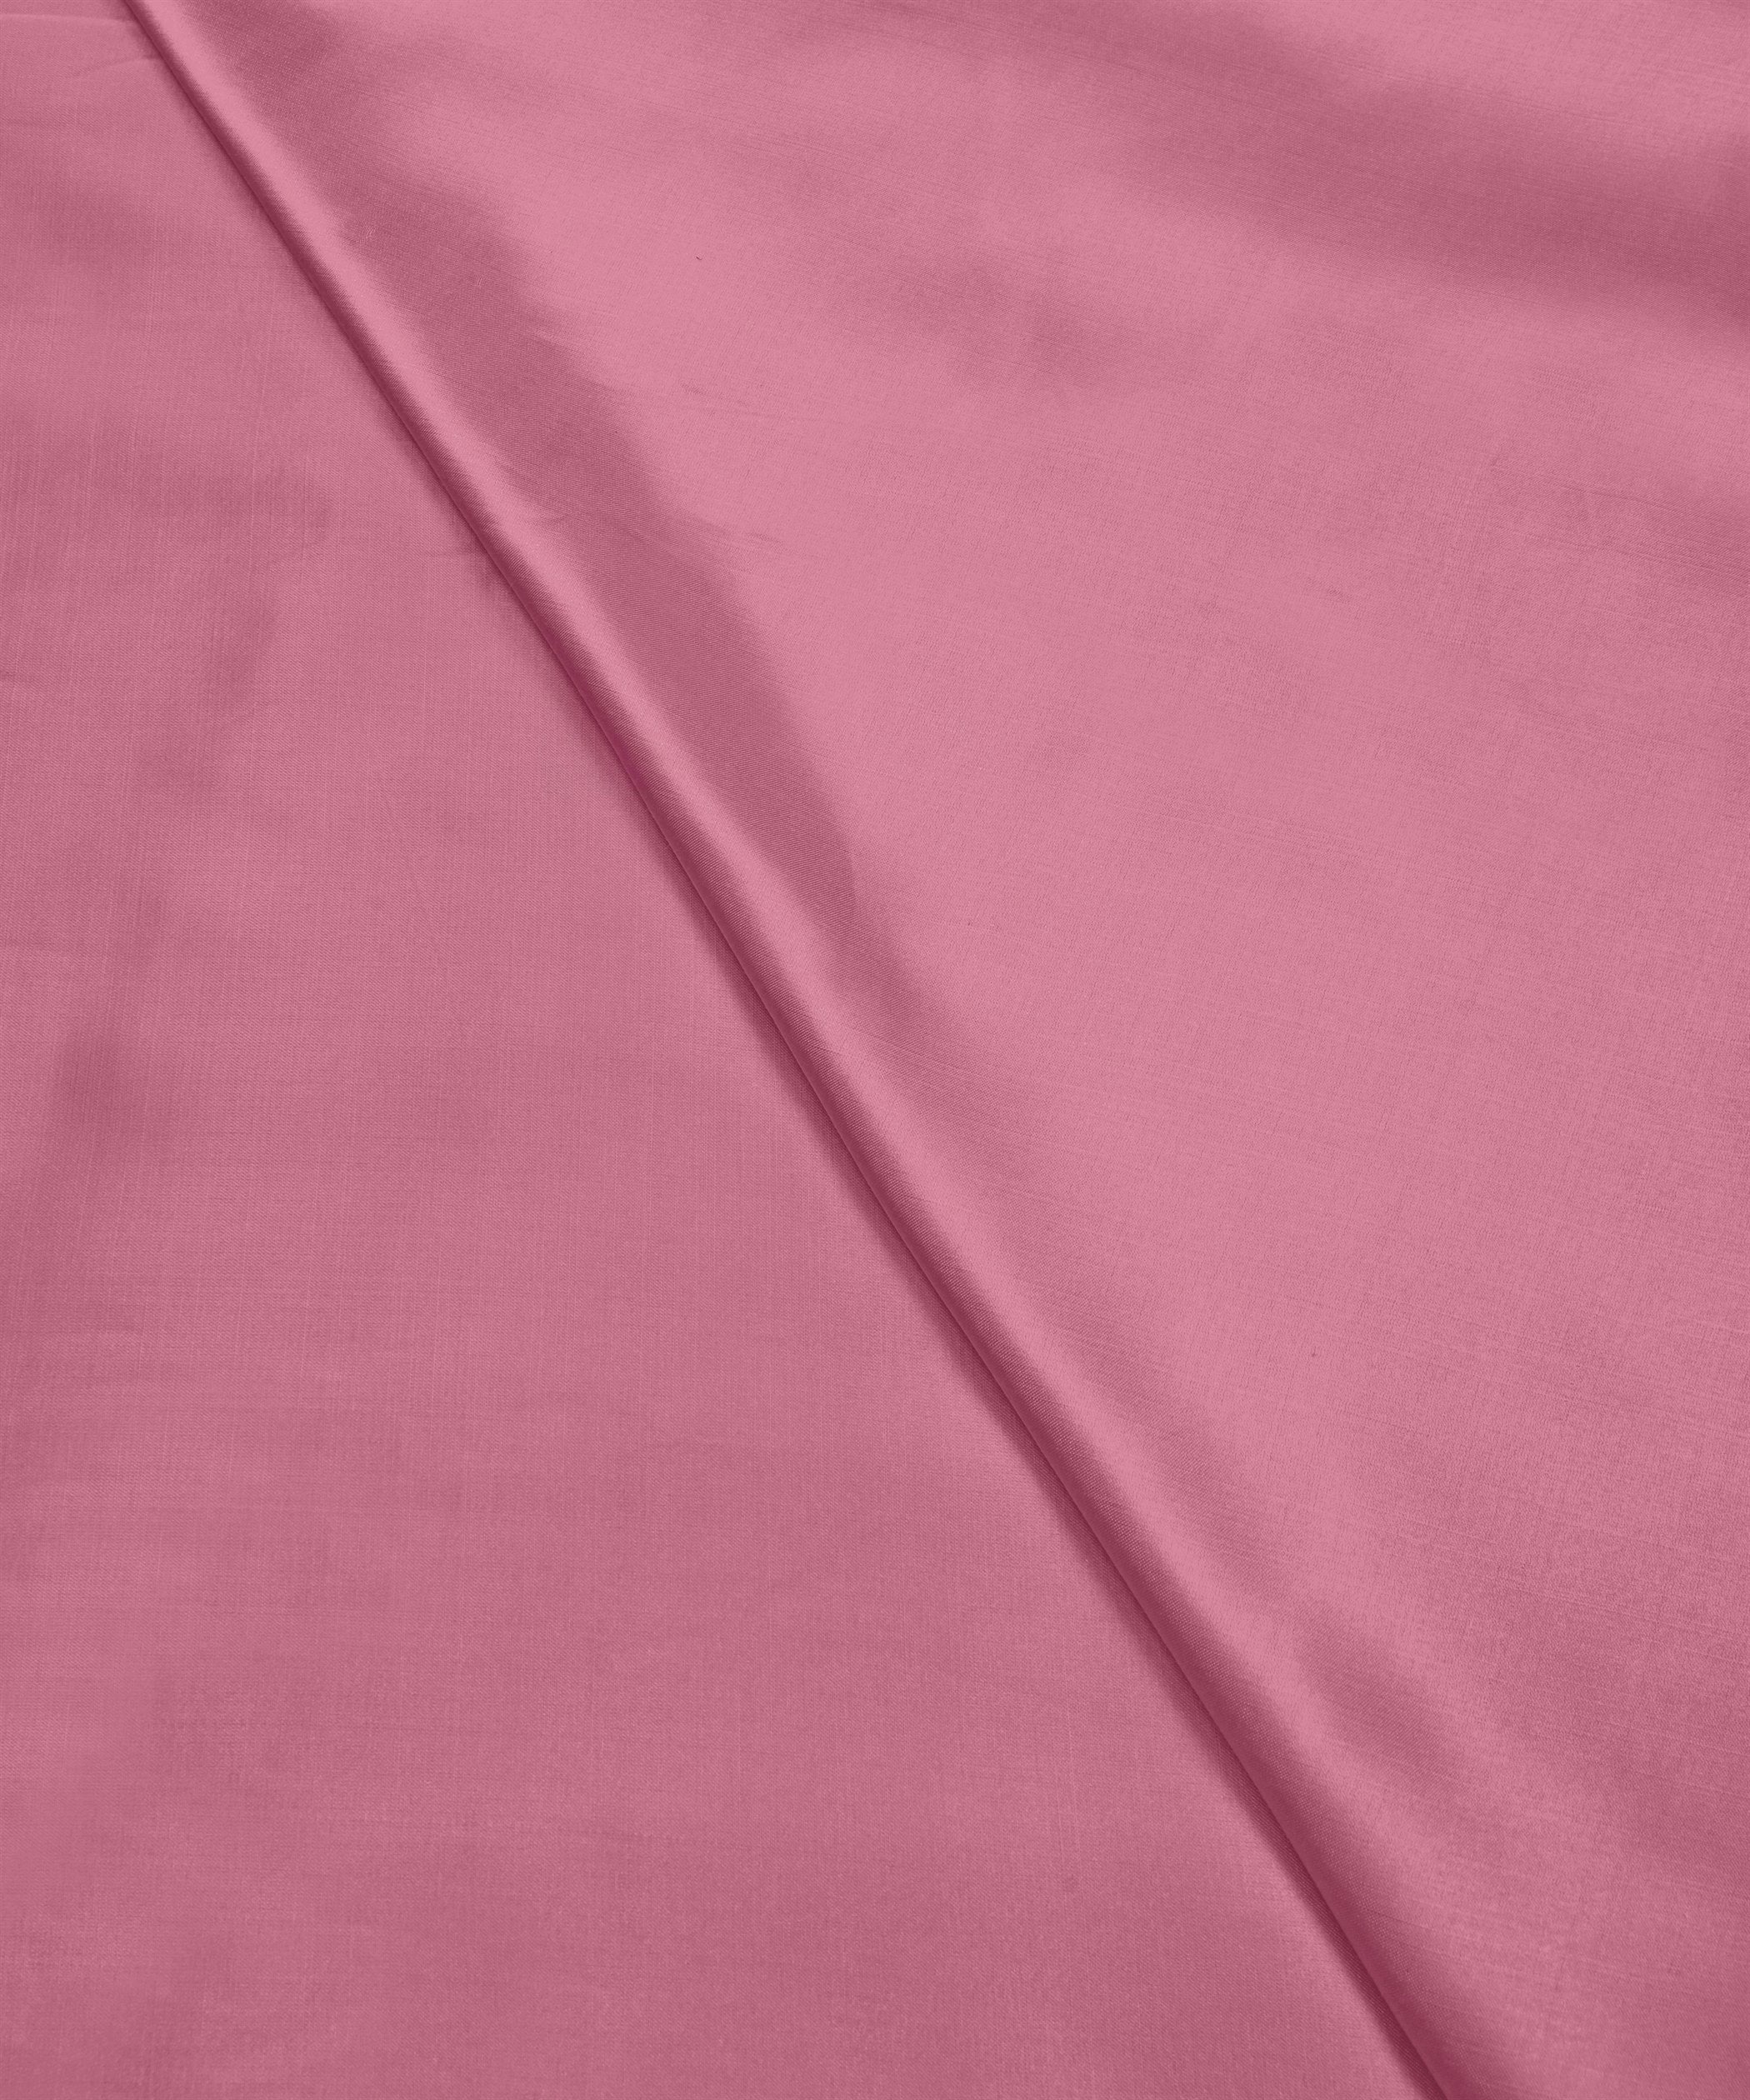 Onion Pink Plain Dyed Modal Satin Fabric